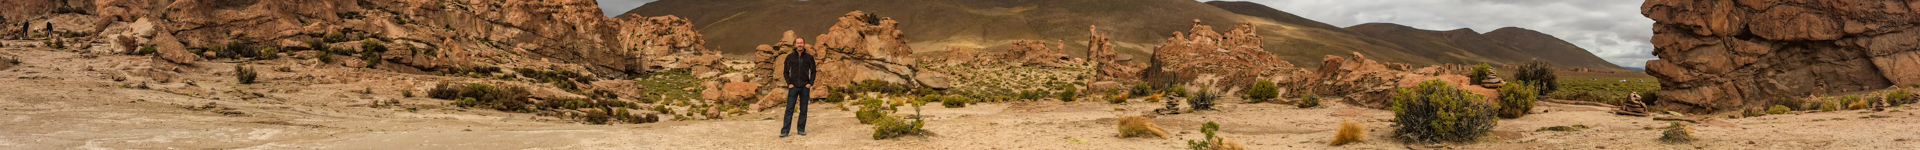 Valle de las Rocas - Sur Lípez, Bolivia